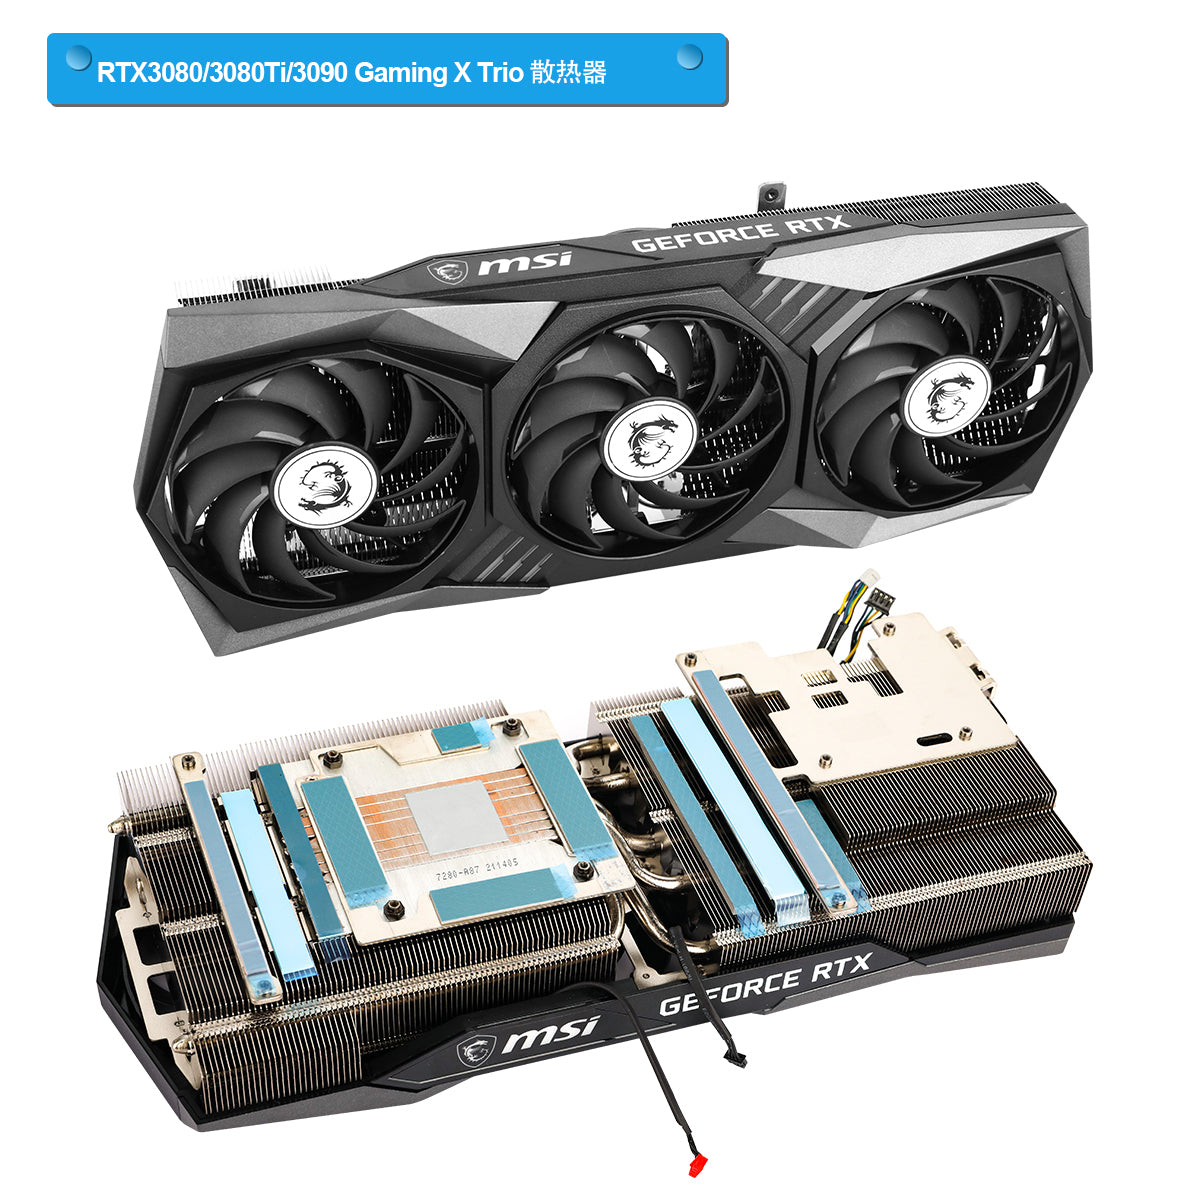 New Original GPU Heatsink Replacement For MSI RTX 3080 3080Ti 3090